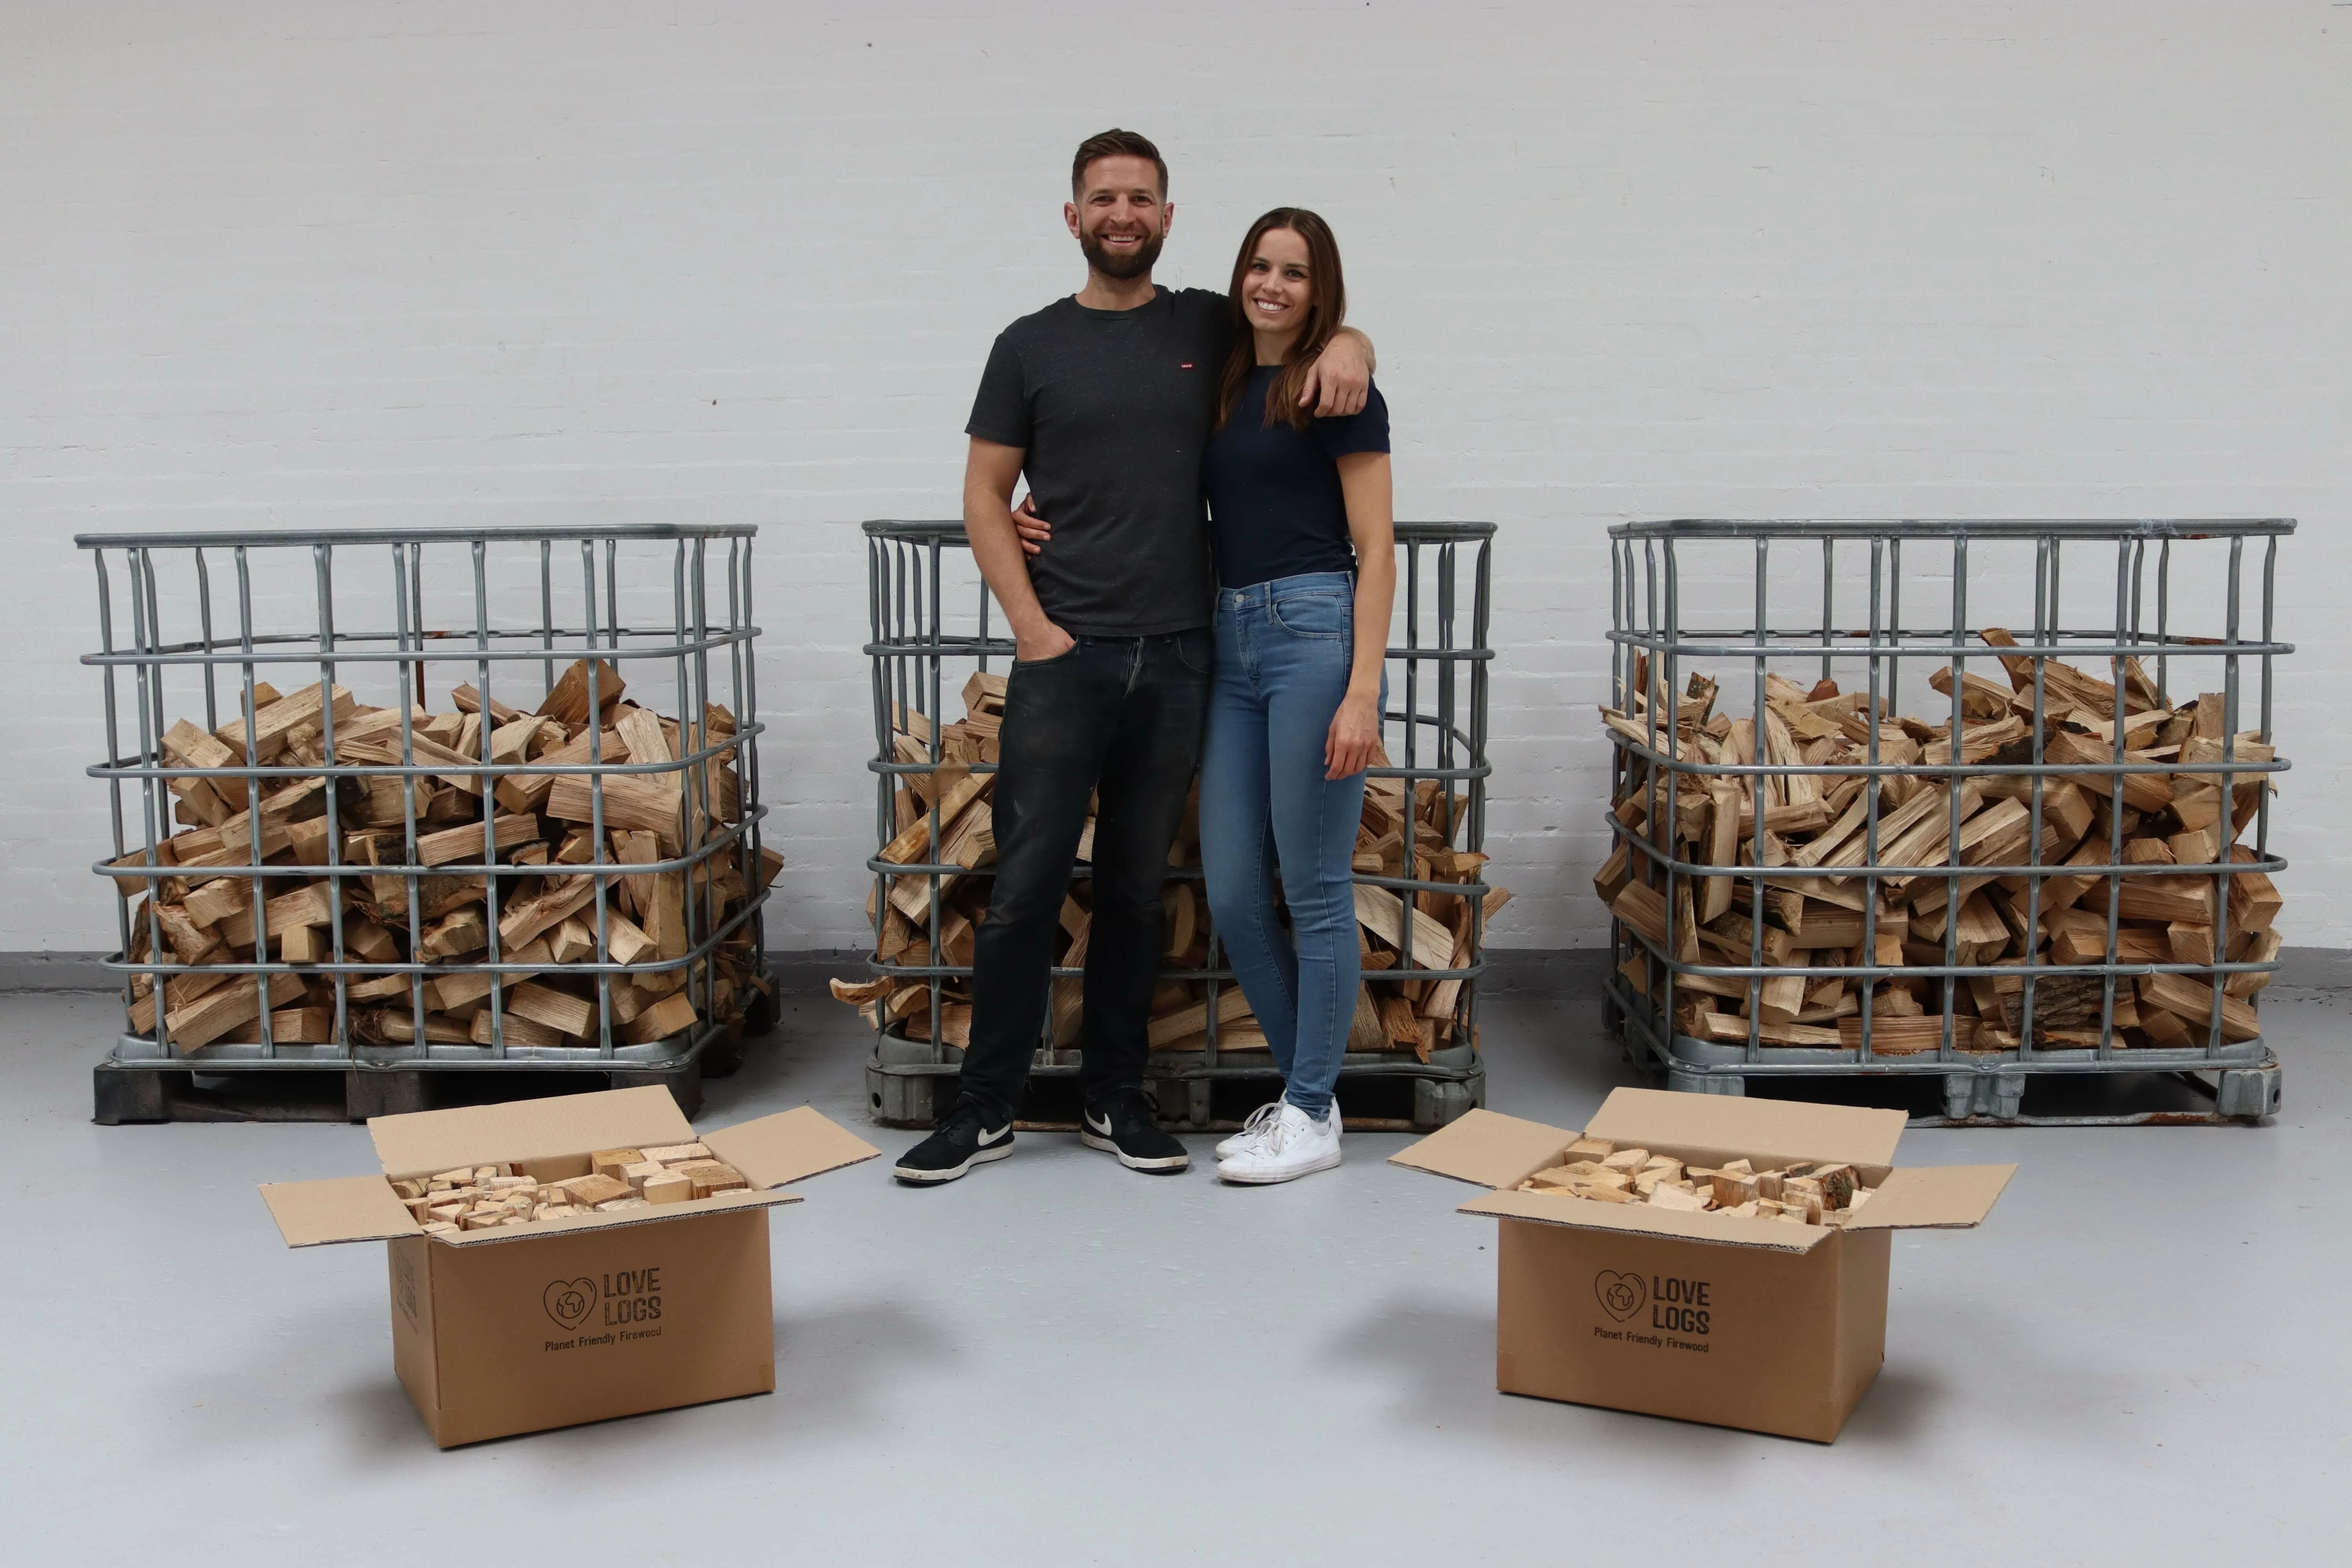 Heather & Paul - Love Logs founders